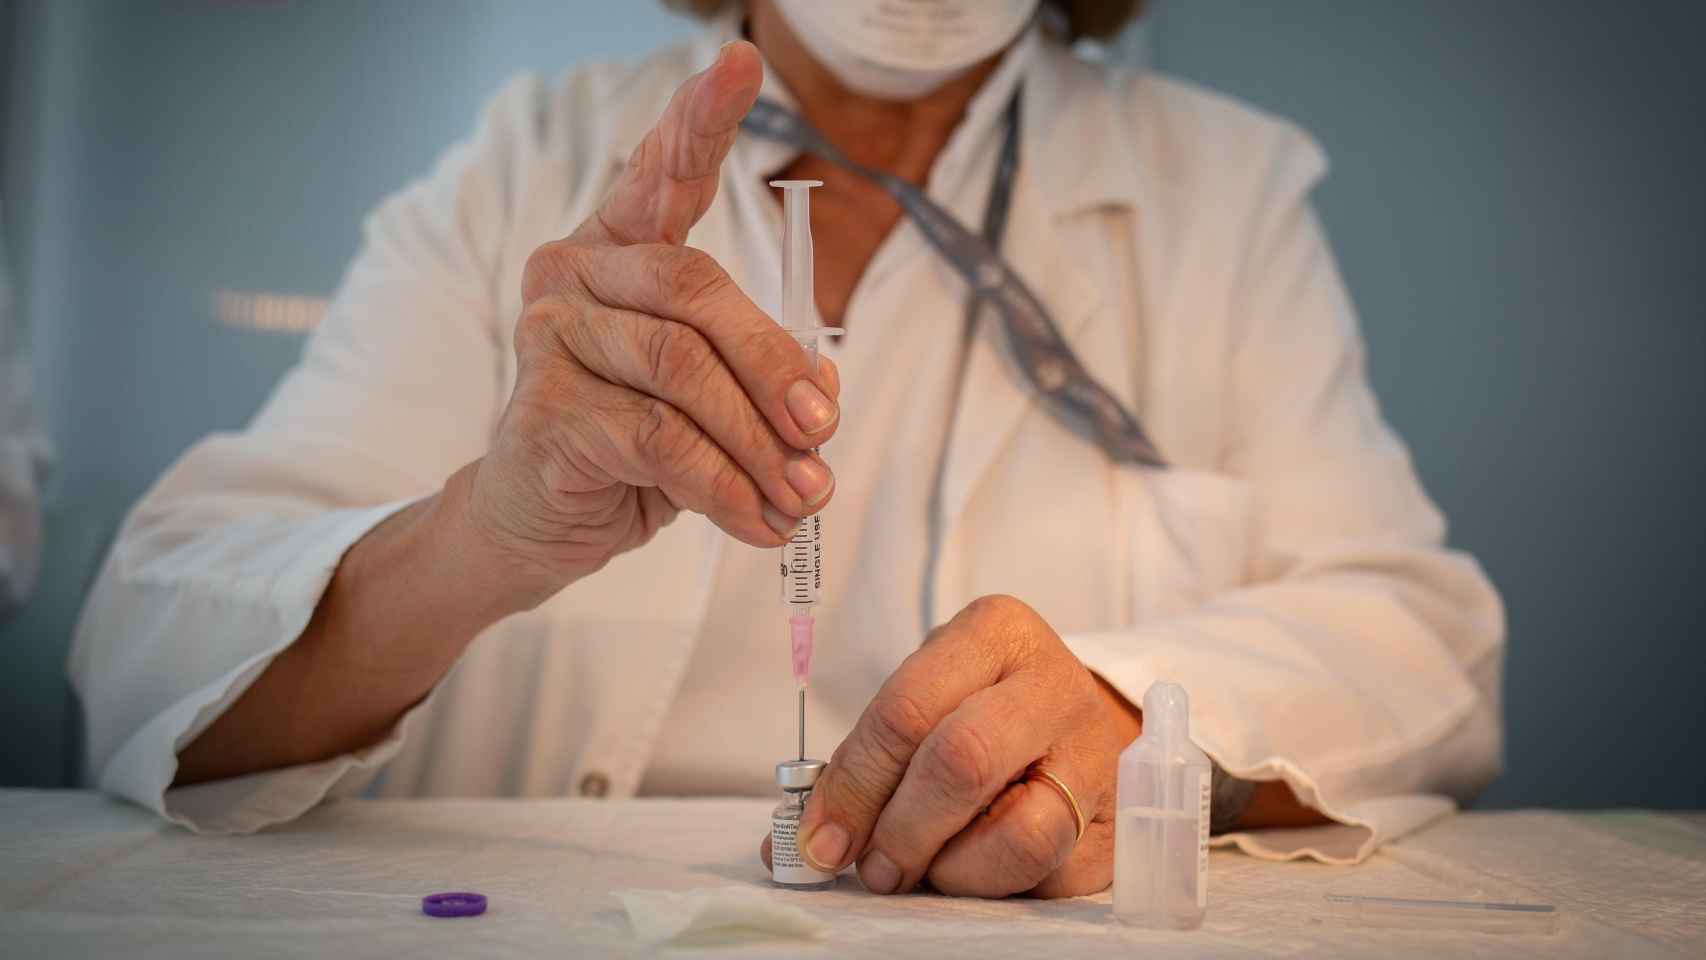 Una enfermera prepara la vacuna Pfizer-BioNtech contra el coronavirus antes de administrársela a un profesional sanitario en el Hospital de la Santa Creu i Sant Pau de Barcelona / EUROPA PRESS